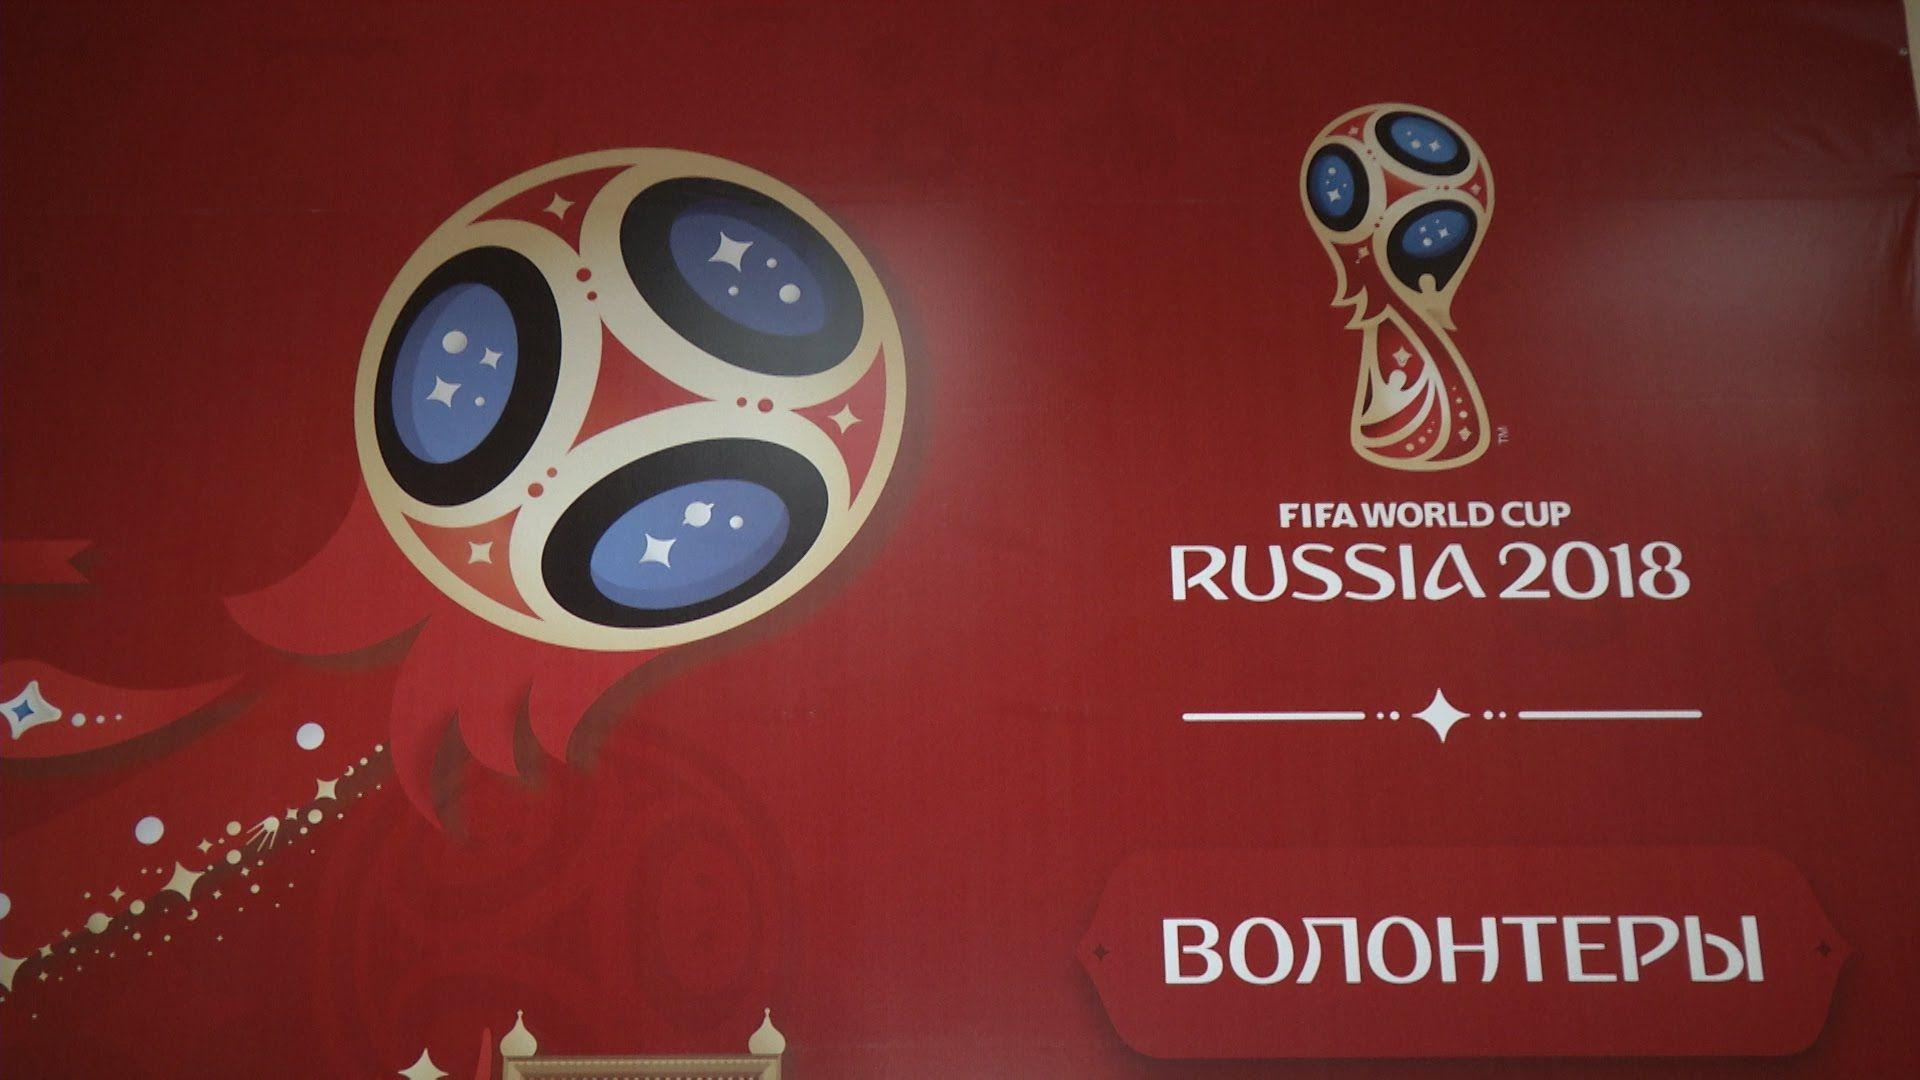 Nizhny Novgorod Volunteer Centre for the 2018 FIFA World Cup Russia